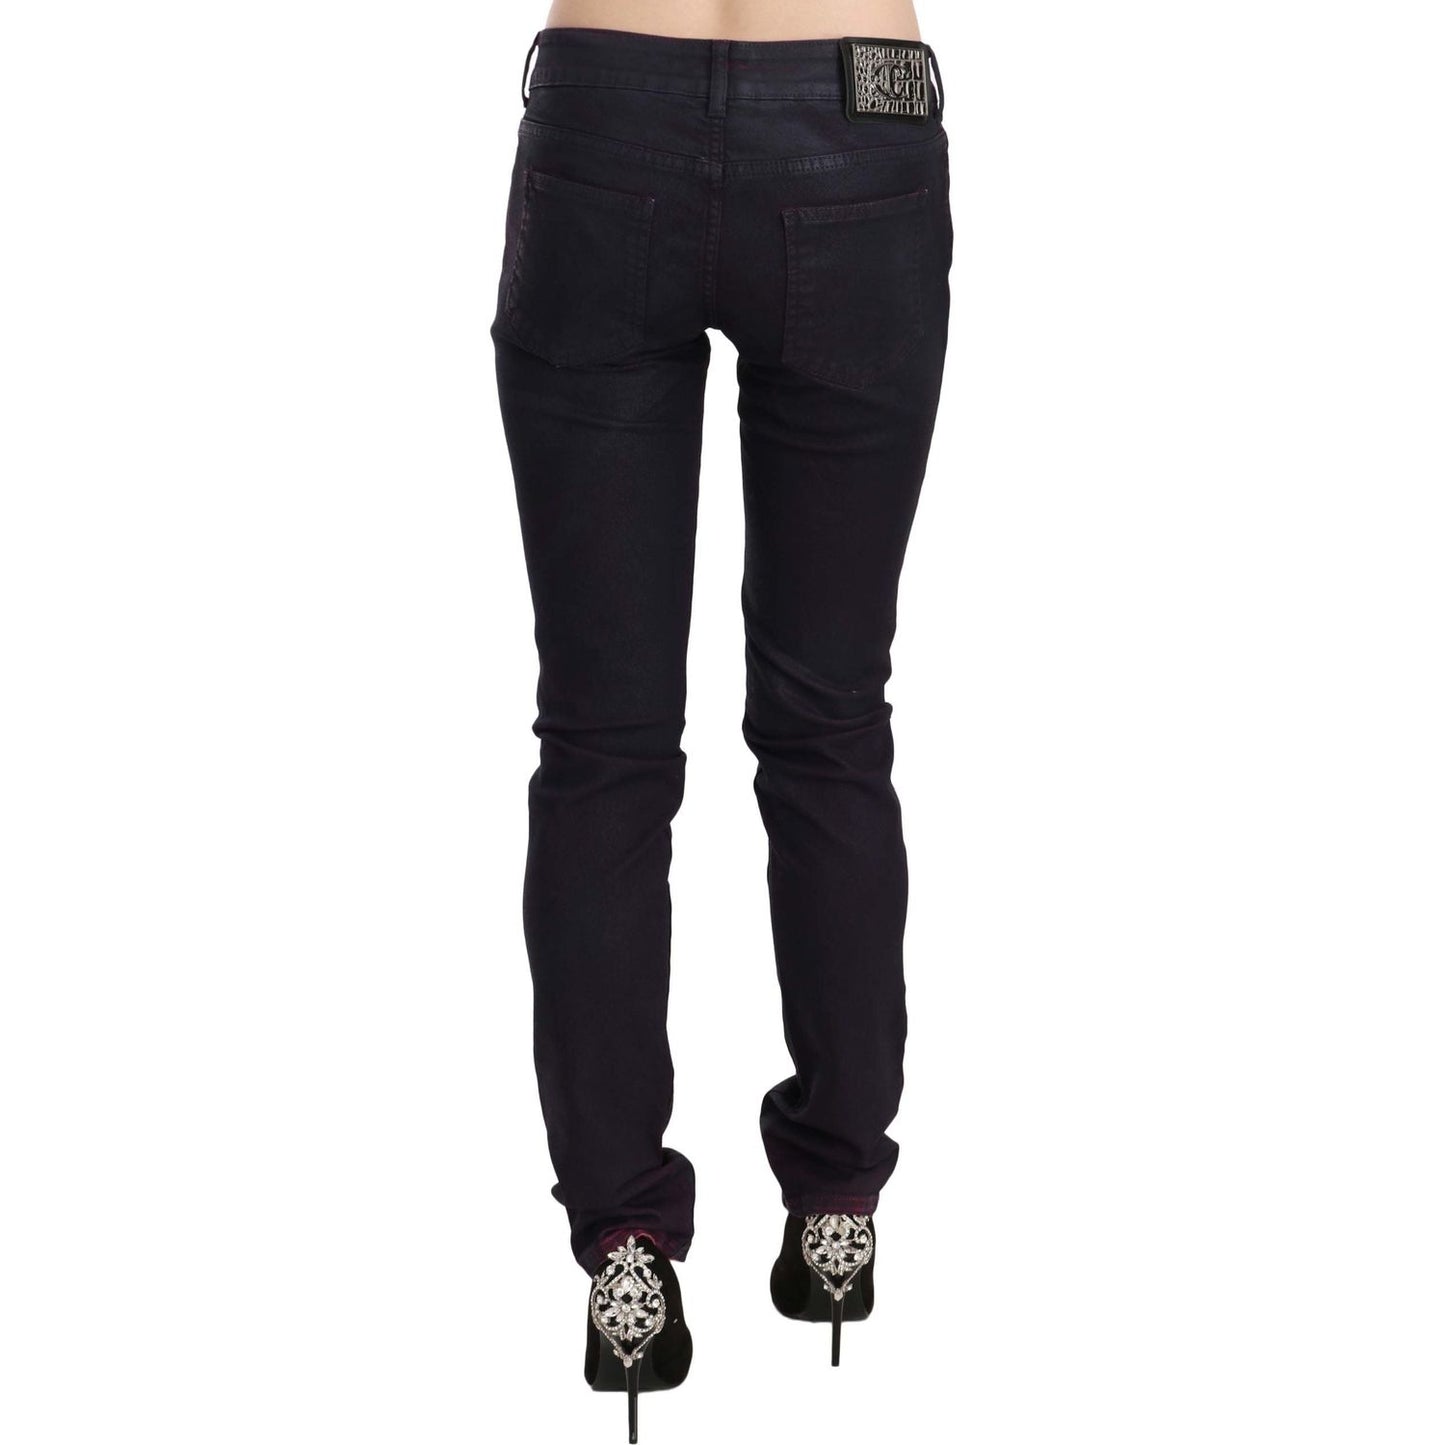 Just Cavalli Chic Black Low Waist Skinny Denim black-cotton-low-waist-skinny-denim-pants Jeans & Pants IMG_5933-scaled-42fee570-9e8.jpg